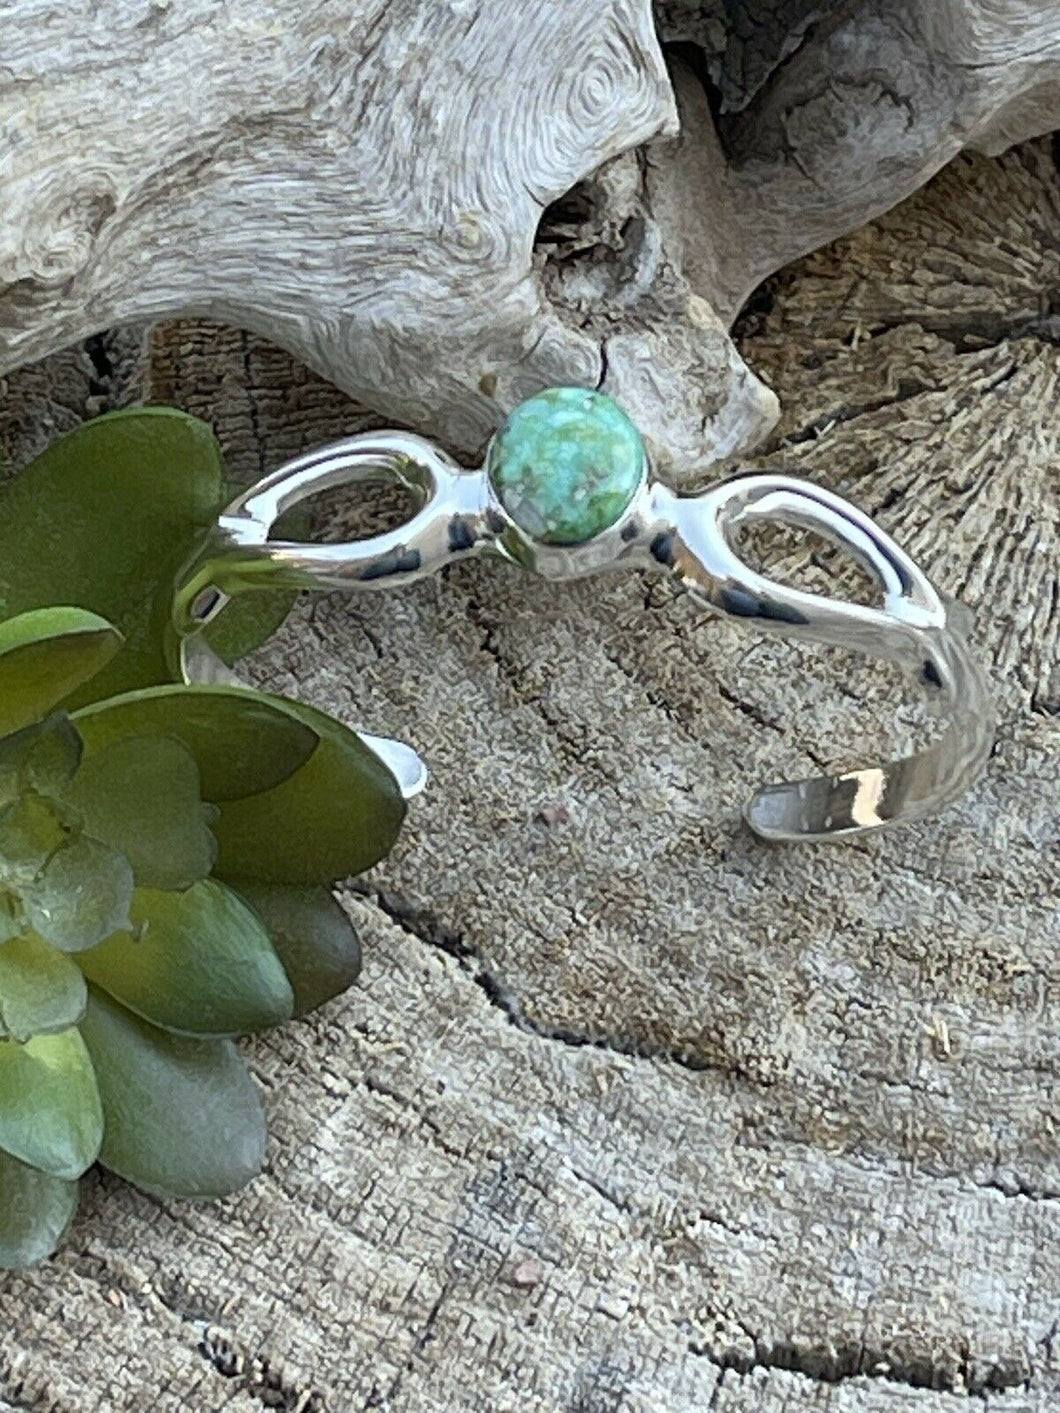 Navajo Sterling Silver Elegant Green Turquoise Cuff Bracelet